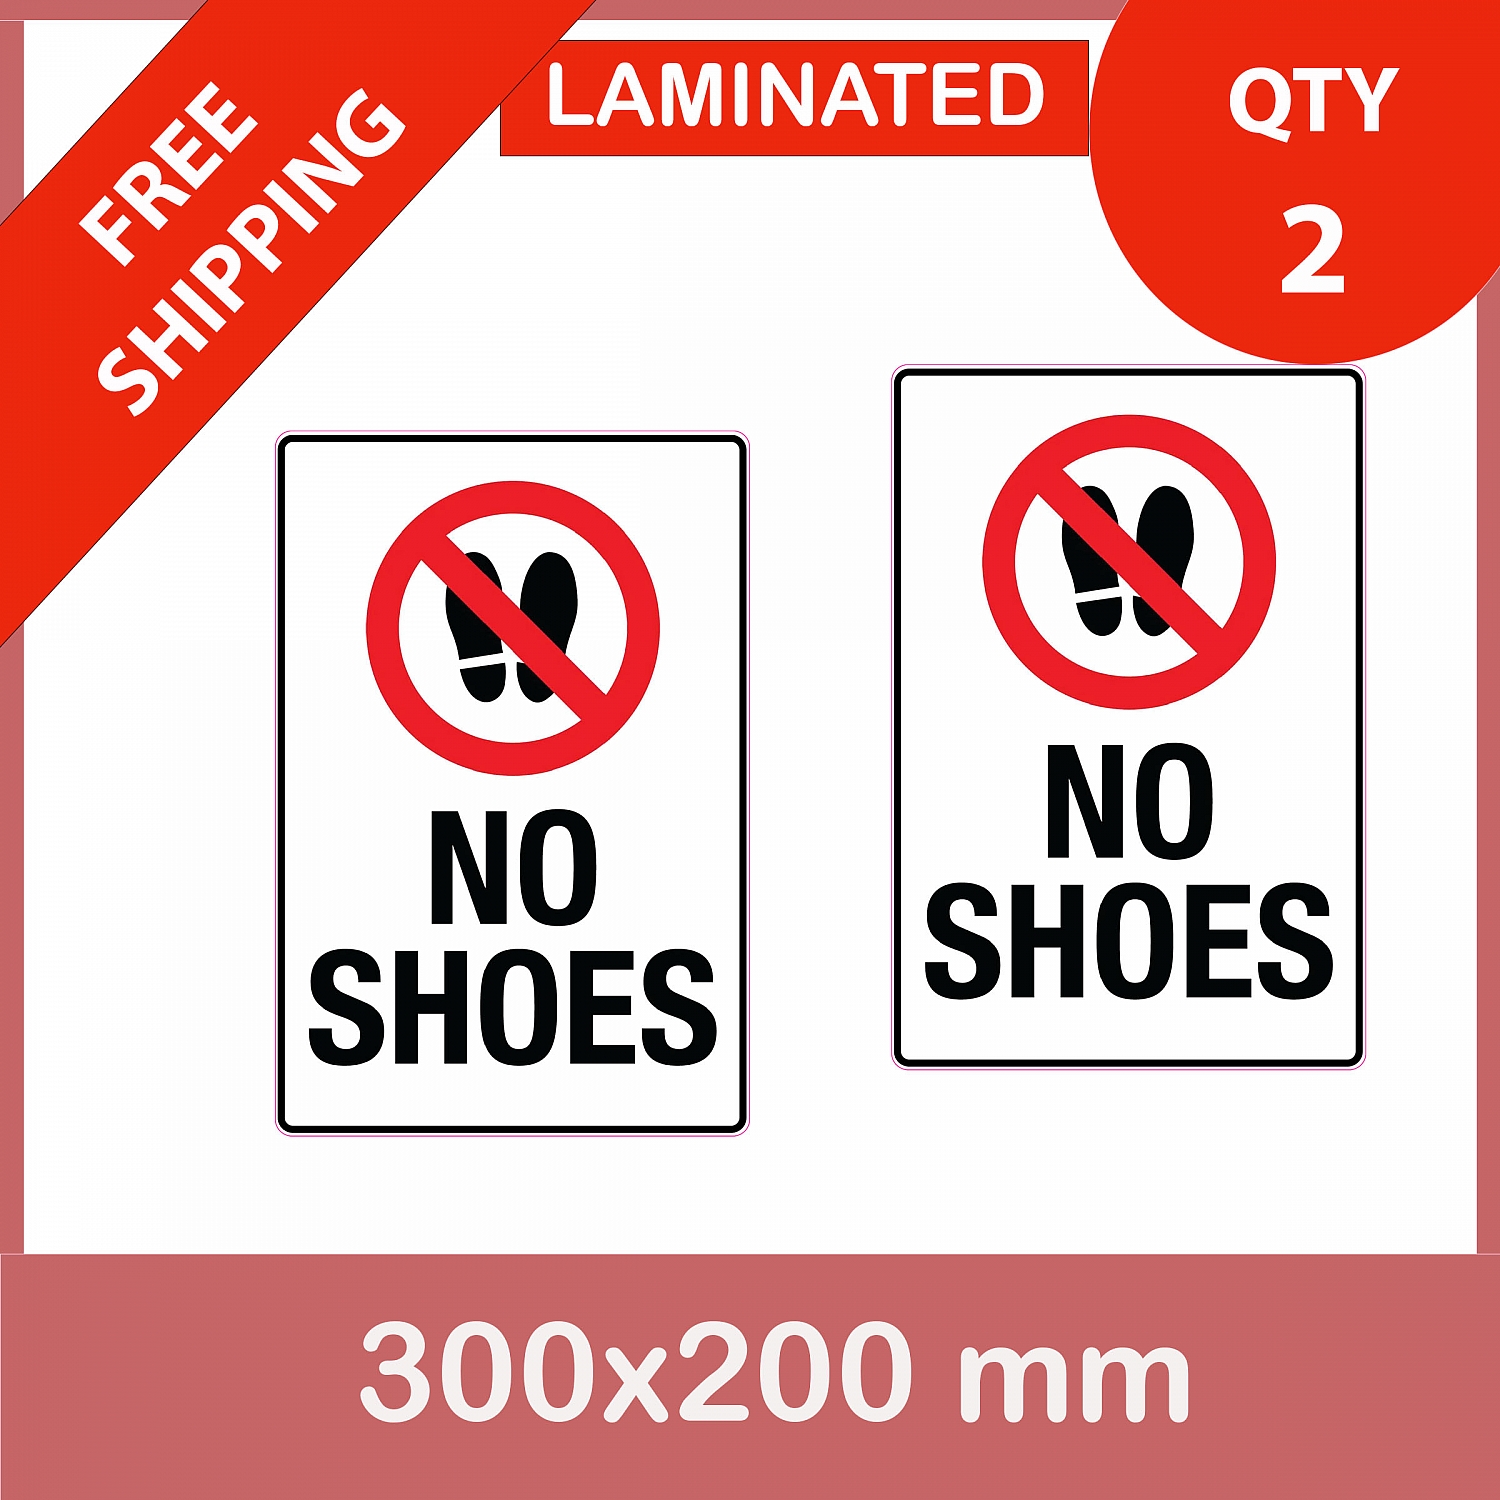 No shoes, QTY 2, DECAL STICKER (LAMINATED) Die Cut for Car ,Ute, Caravan, 4x4 | listing_no_shoes_200x300mm.jpg